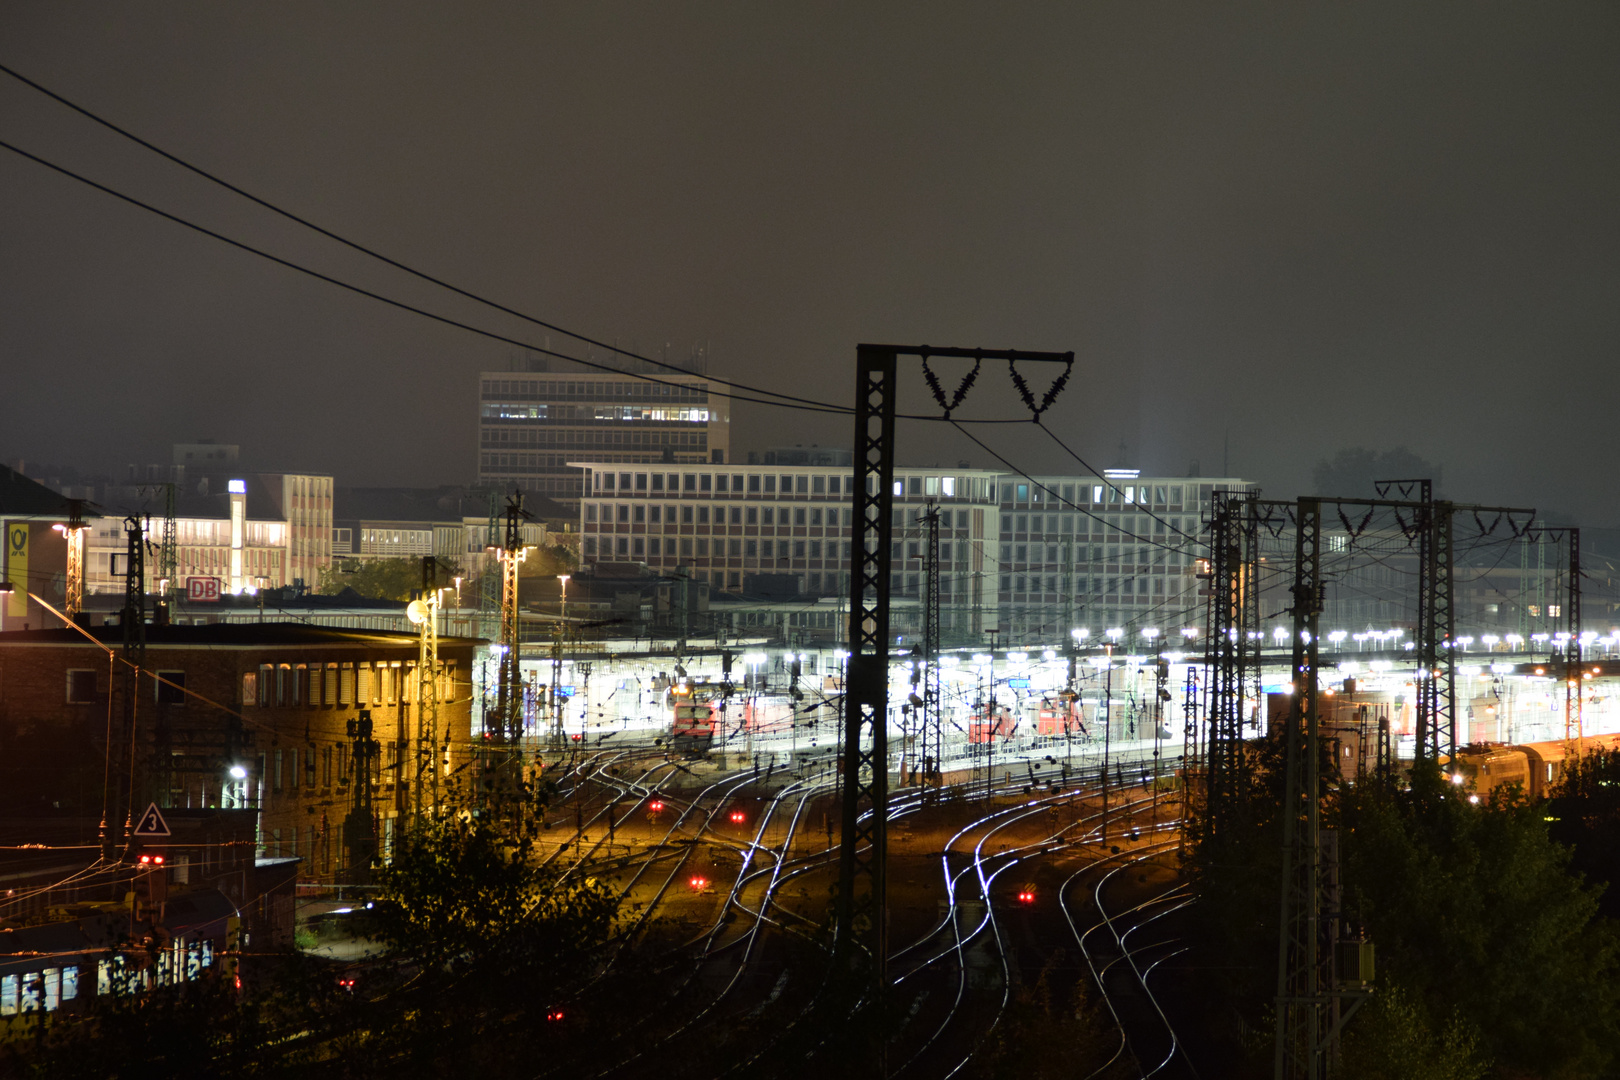 Bahnhof bei Nacht - TiltShift